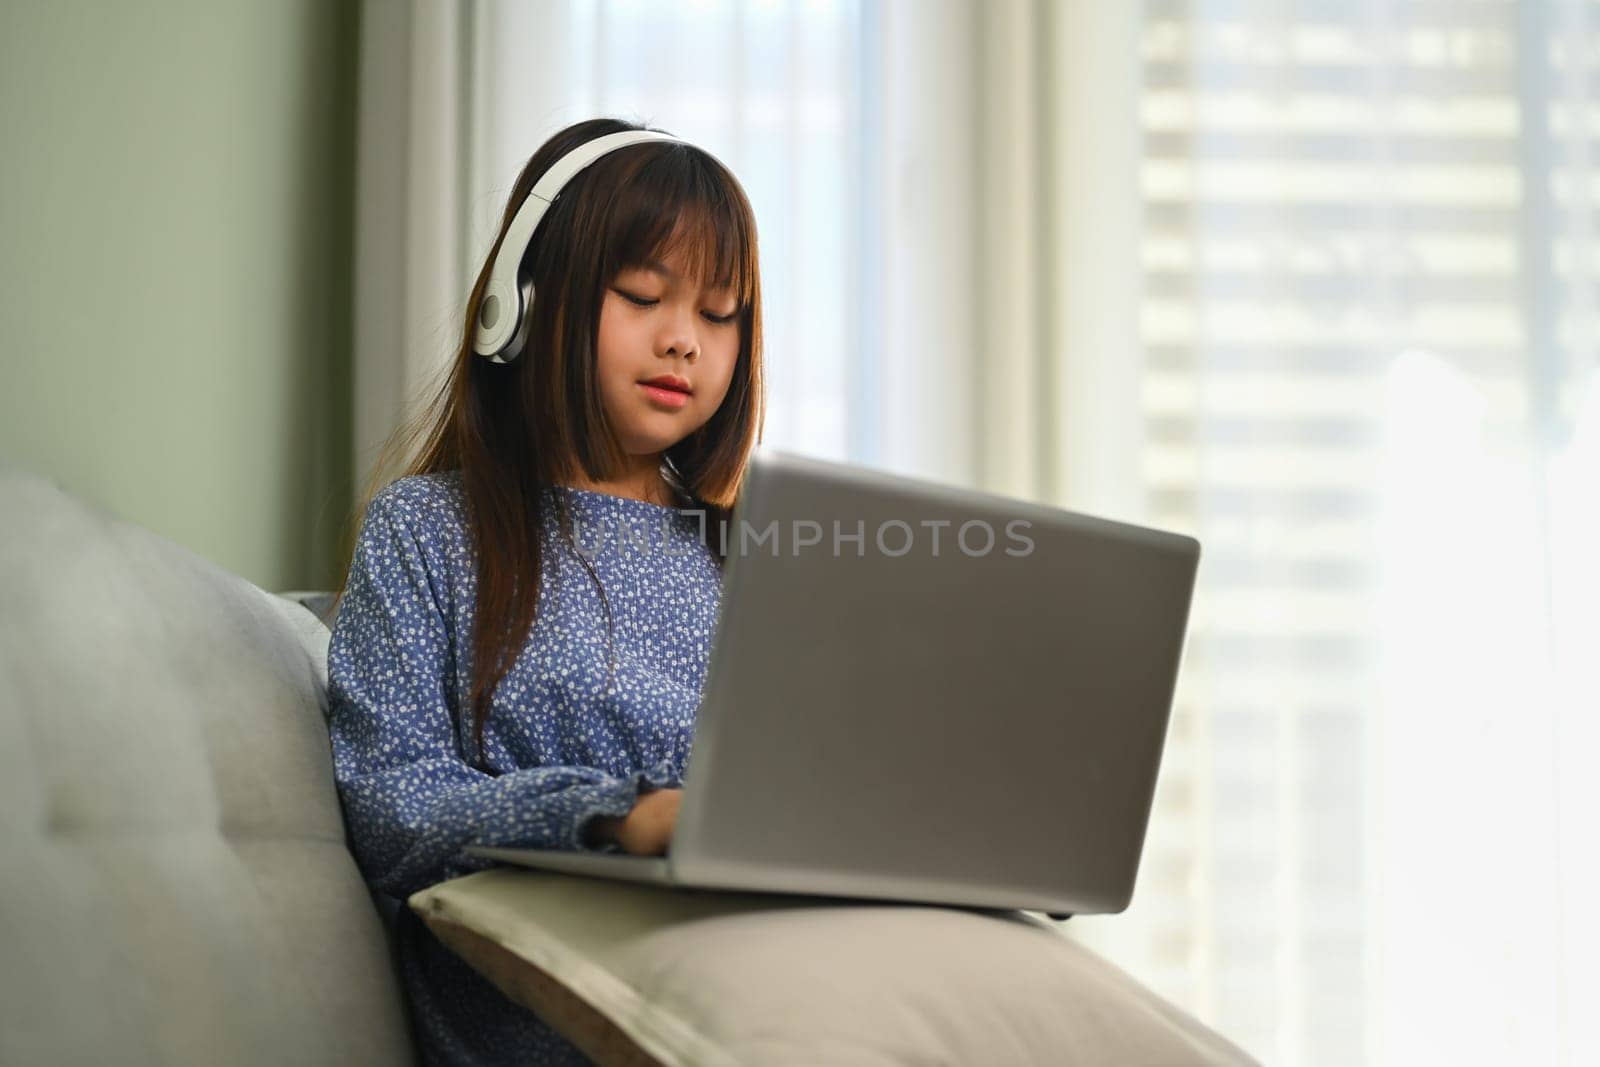 Cute schoolgirl in headphone watching online virtual class on laptop. Education concept. by prathanchorruangsak